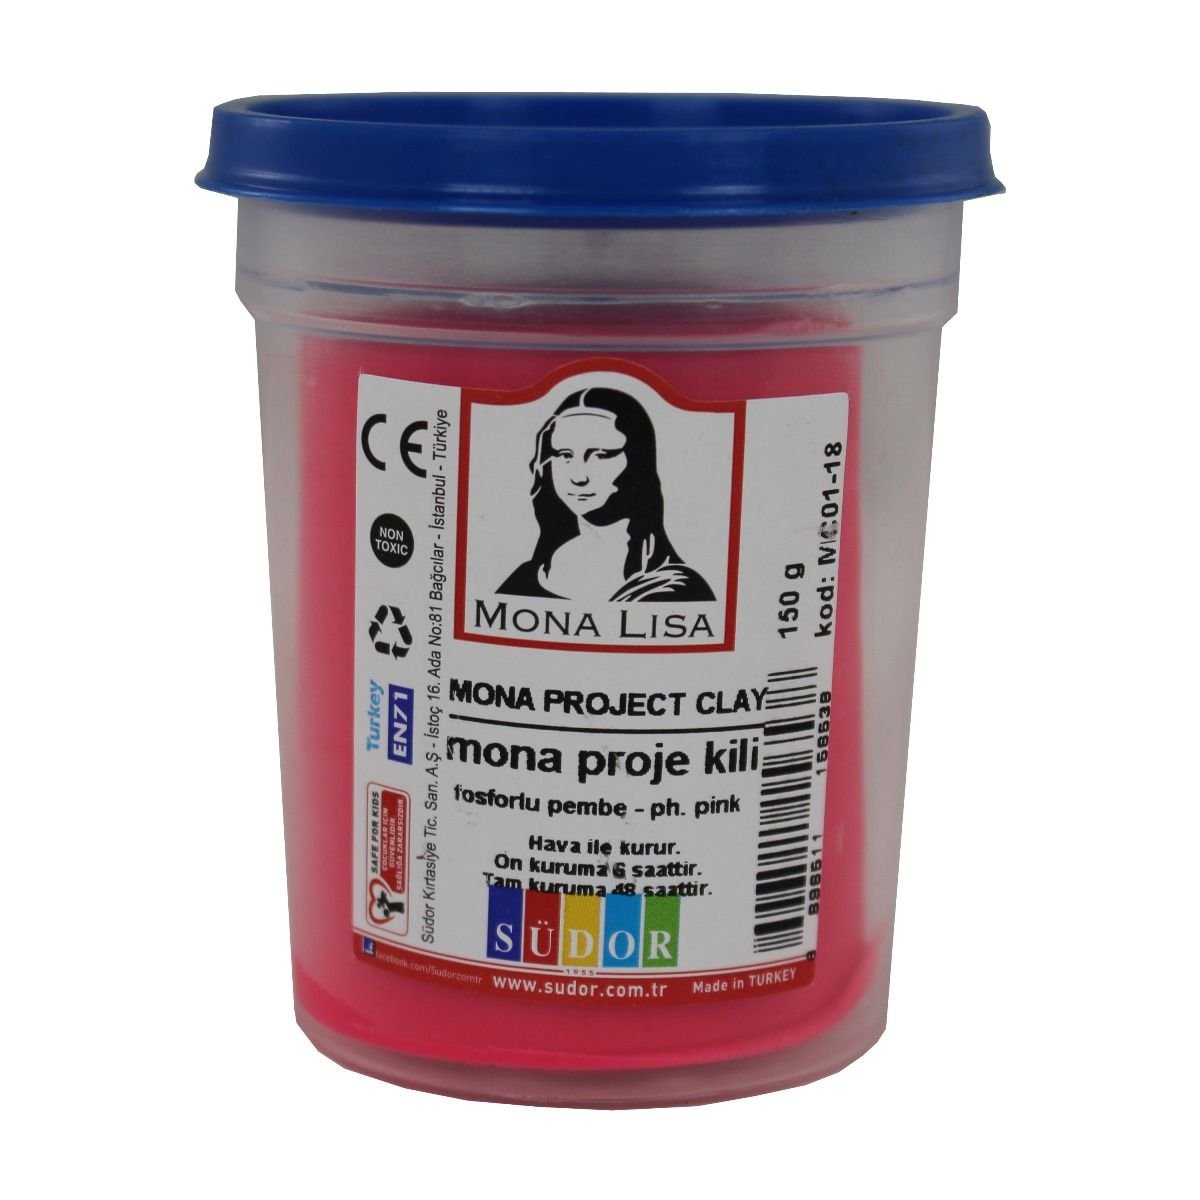 Südor Mona Lisa Proje Kili Fosforlu Pembe 150 gr